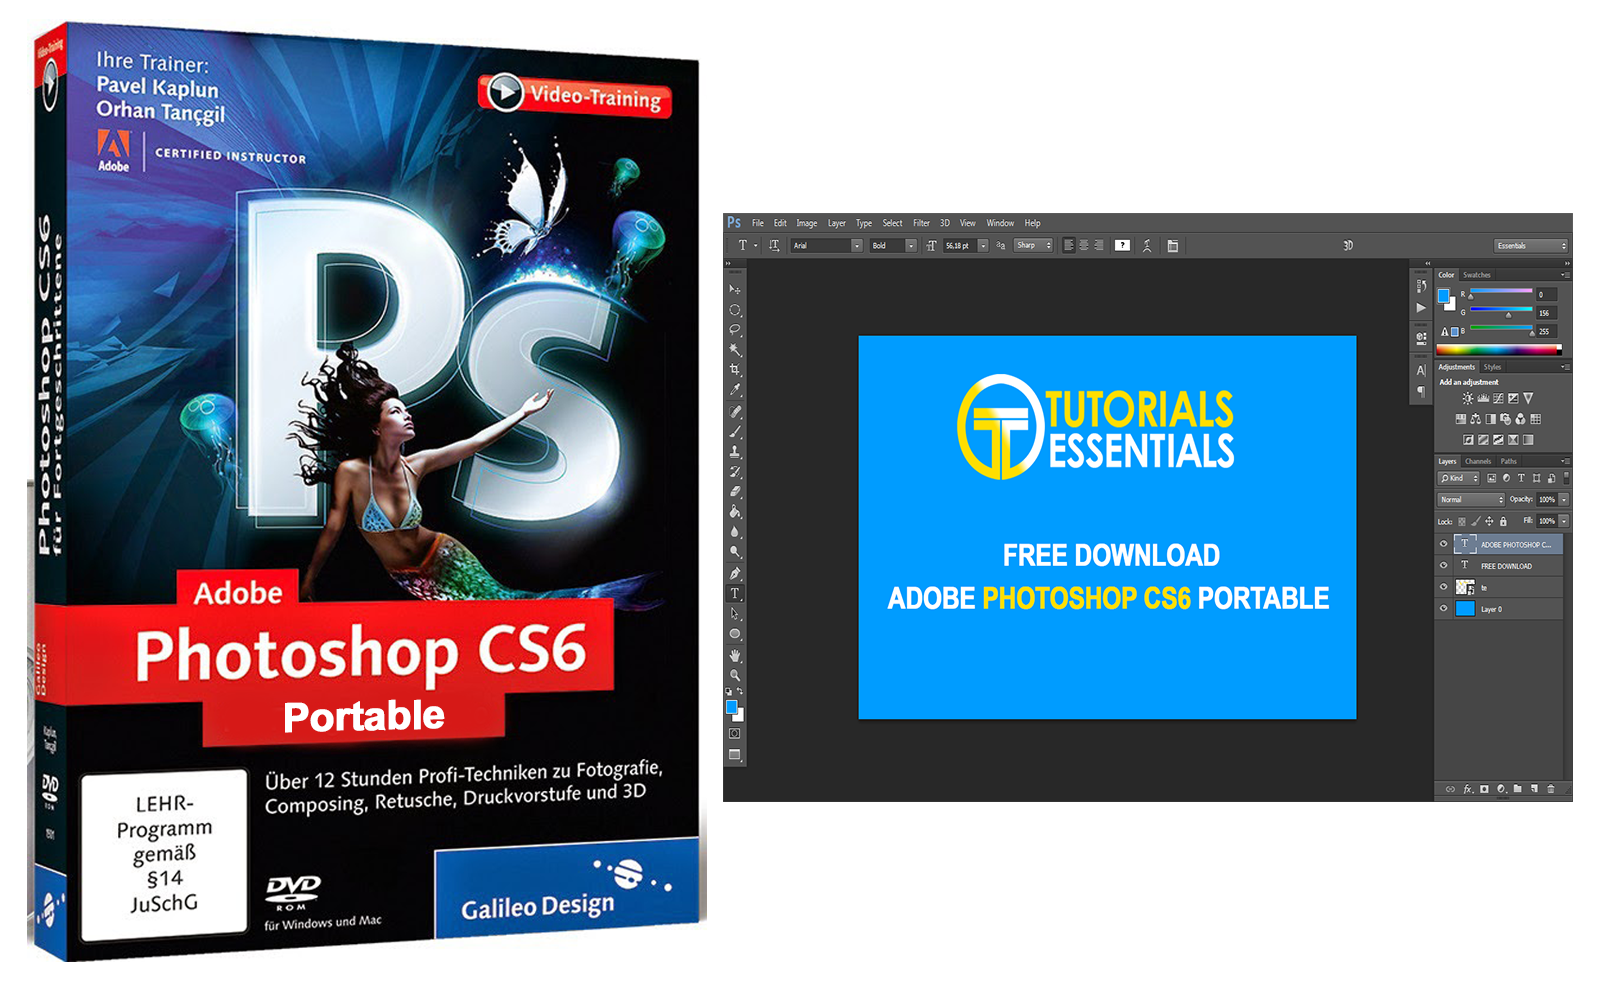 Download Adobe Photoshop Cs6 Portable Tutorials Essentials